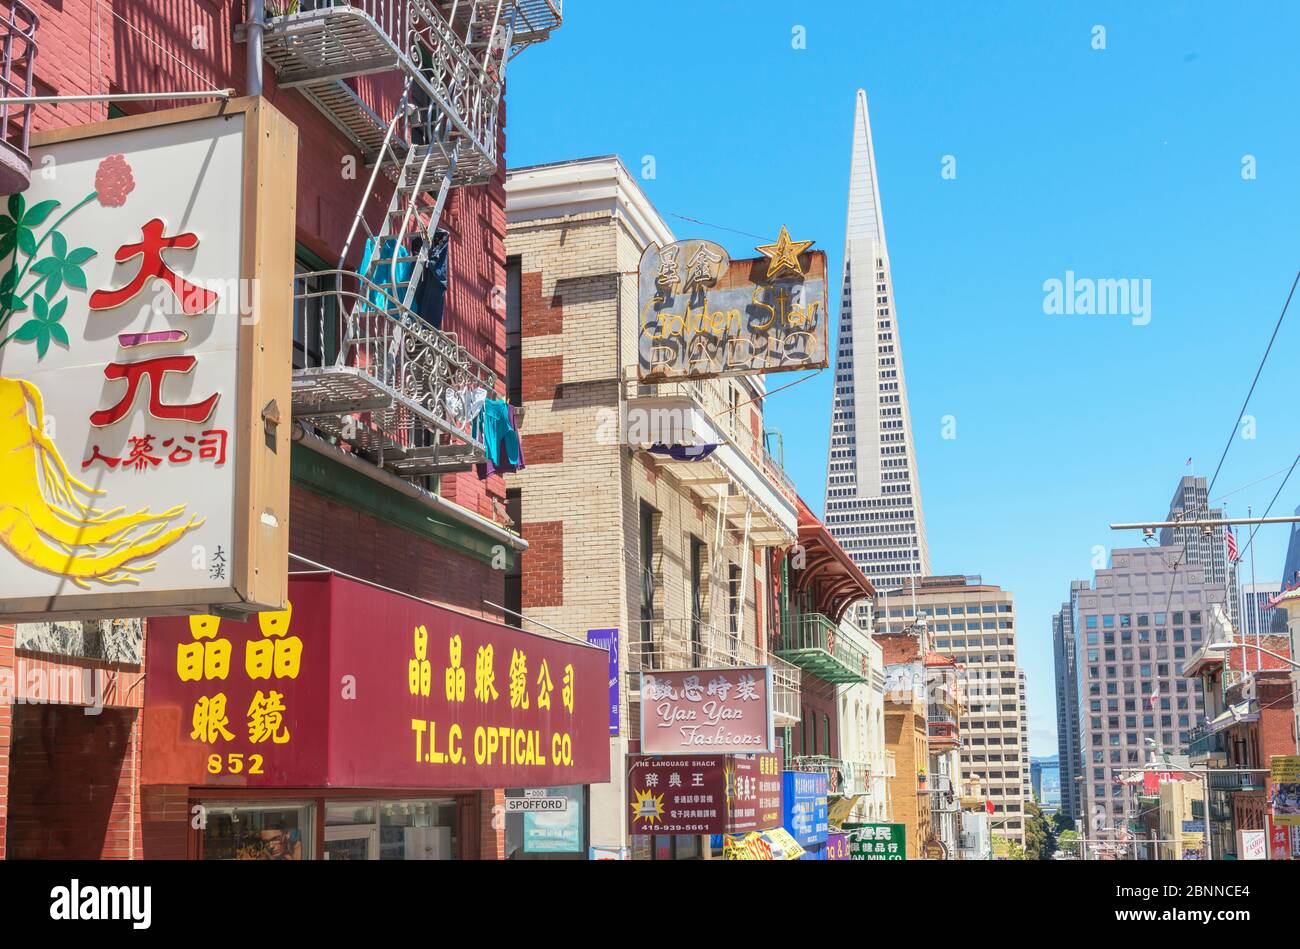 TransAmerica building, Chinatown, San Francisco, California, USA Stock Photo